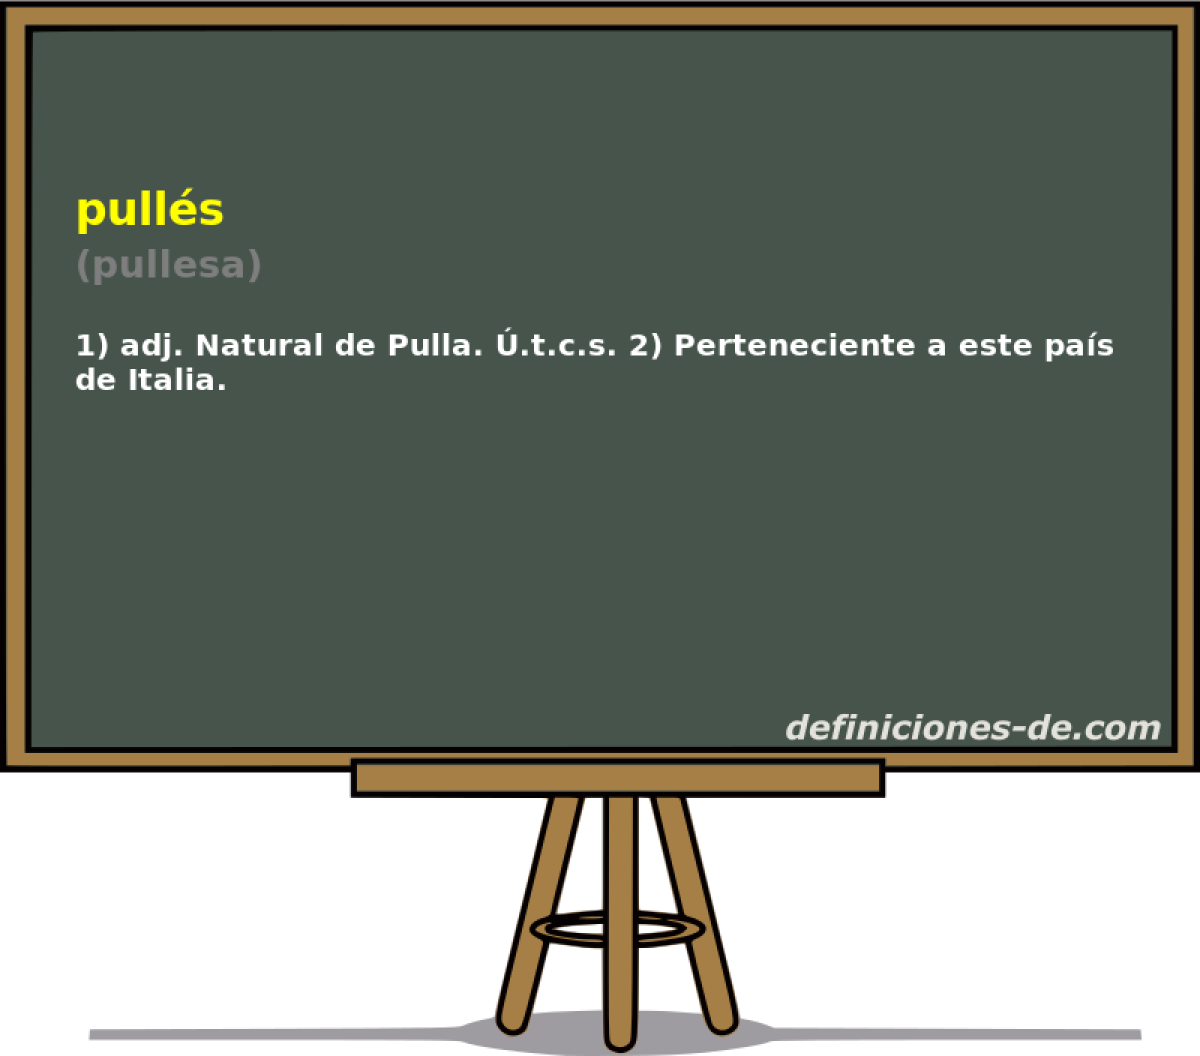 pulls (pullesa)